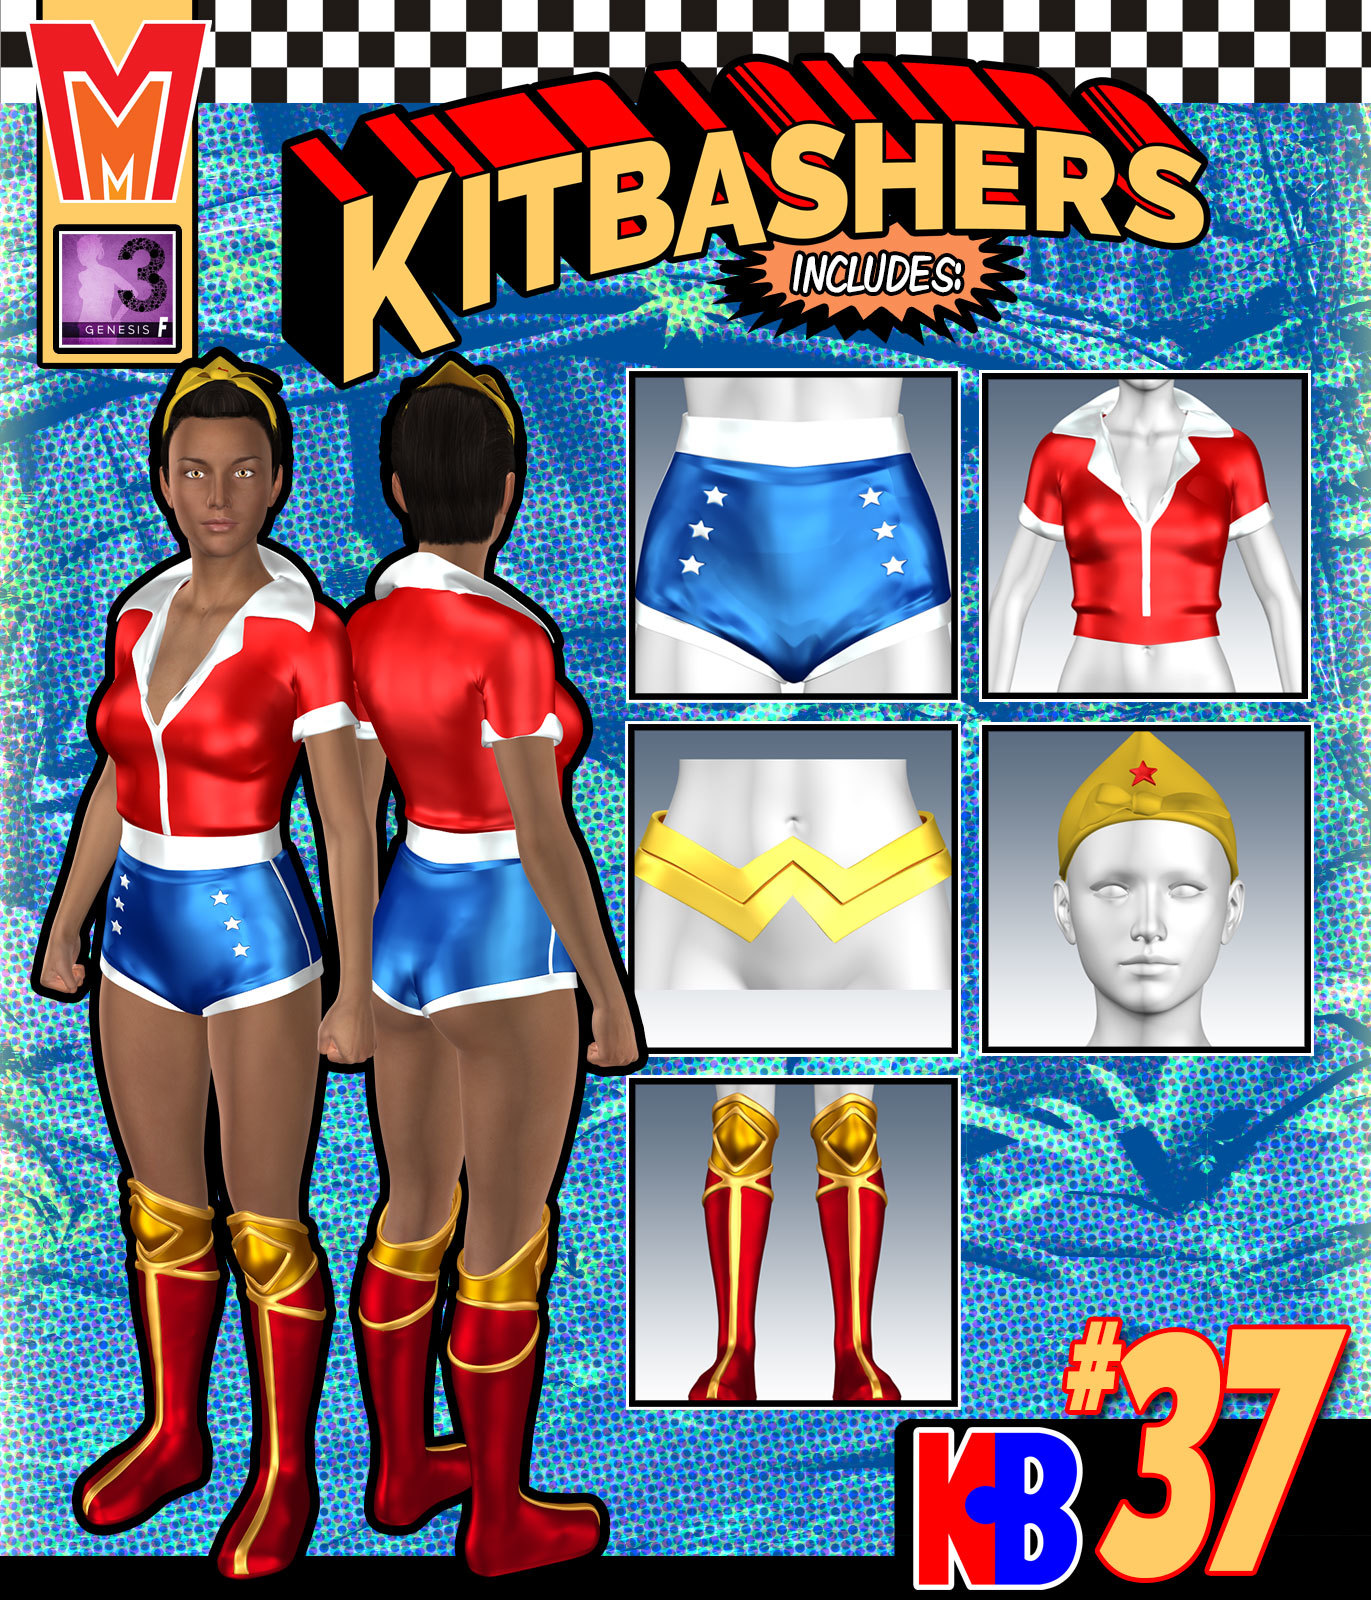 Kitbashers 037 MMG3F by: MightyMite, 3D Models by Daz 3D